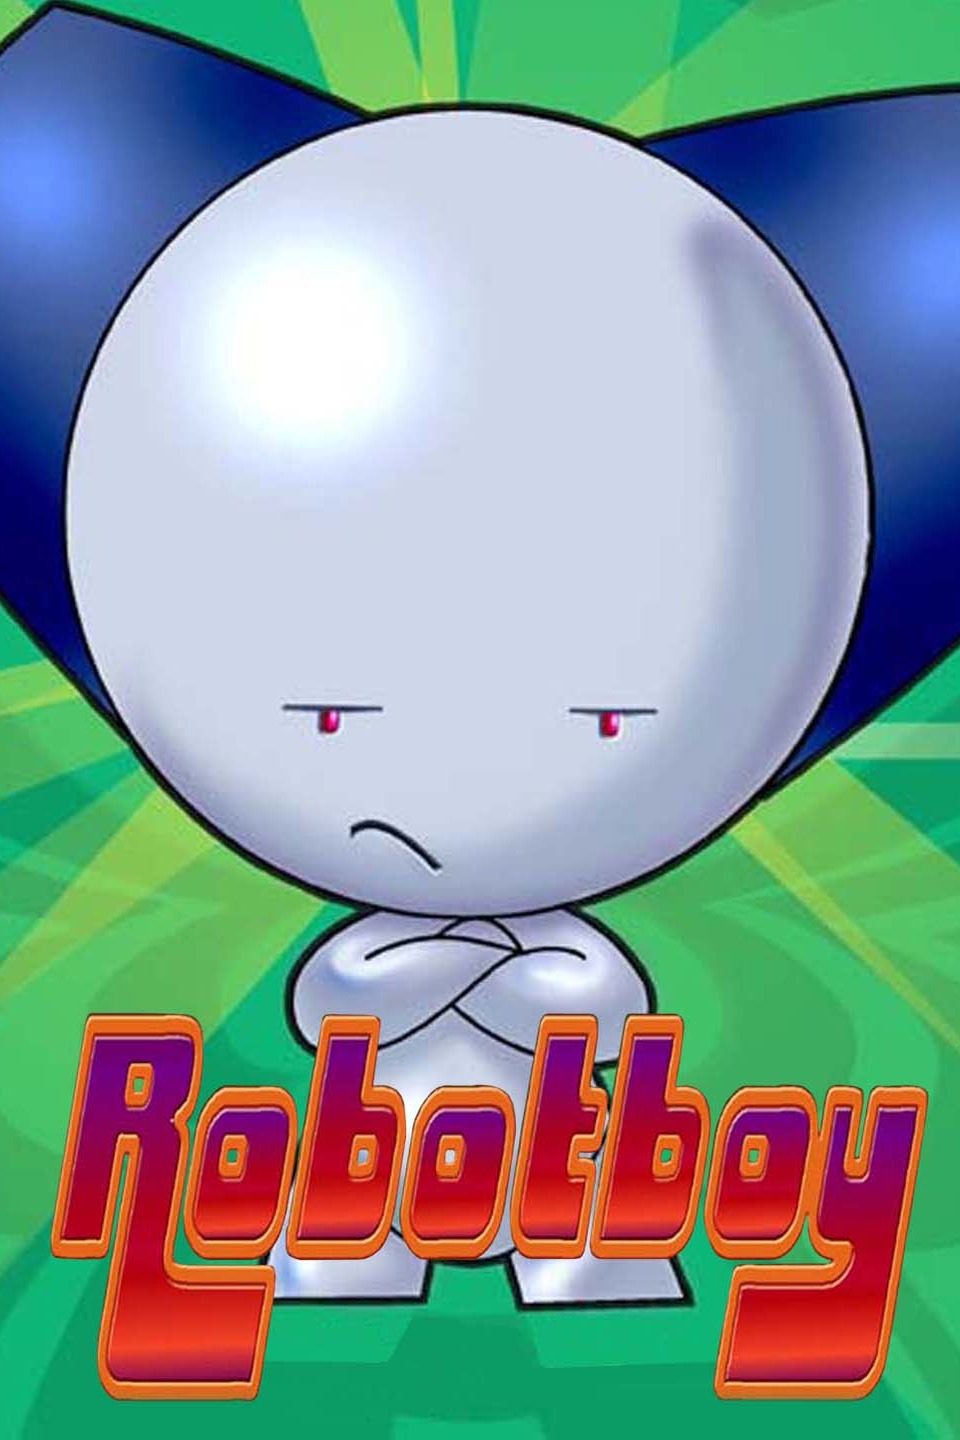 Agent Kalaschnikov, Robotboy Wiki